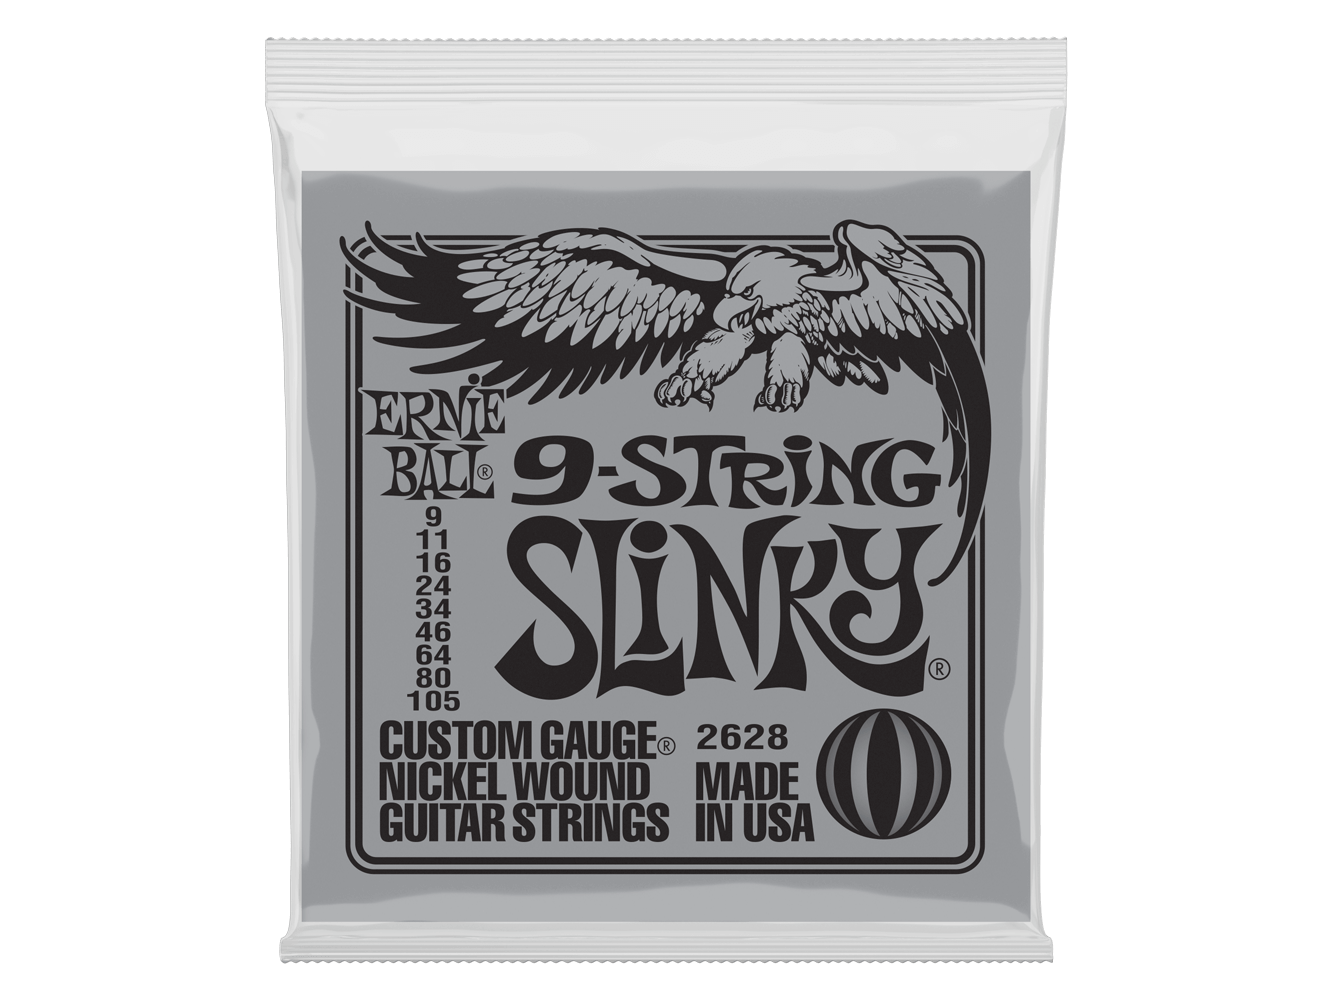 Ernie Ball 2628 Slinky 9-String Electric Guitar Strings 9-105